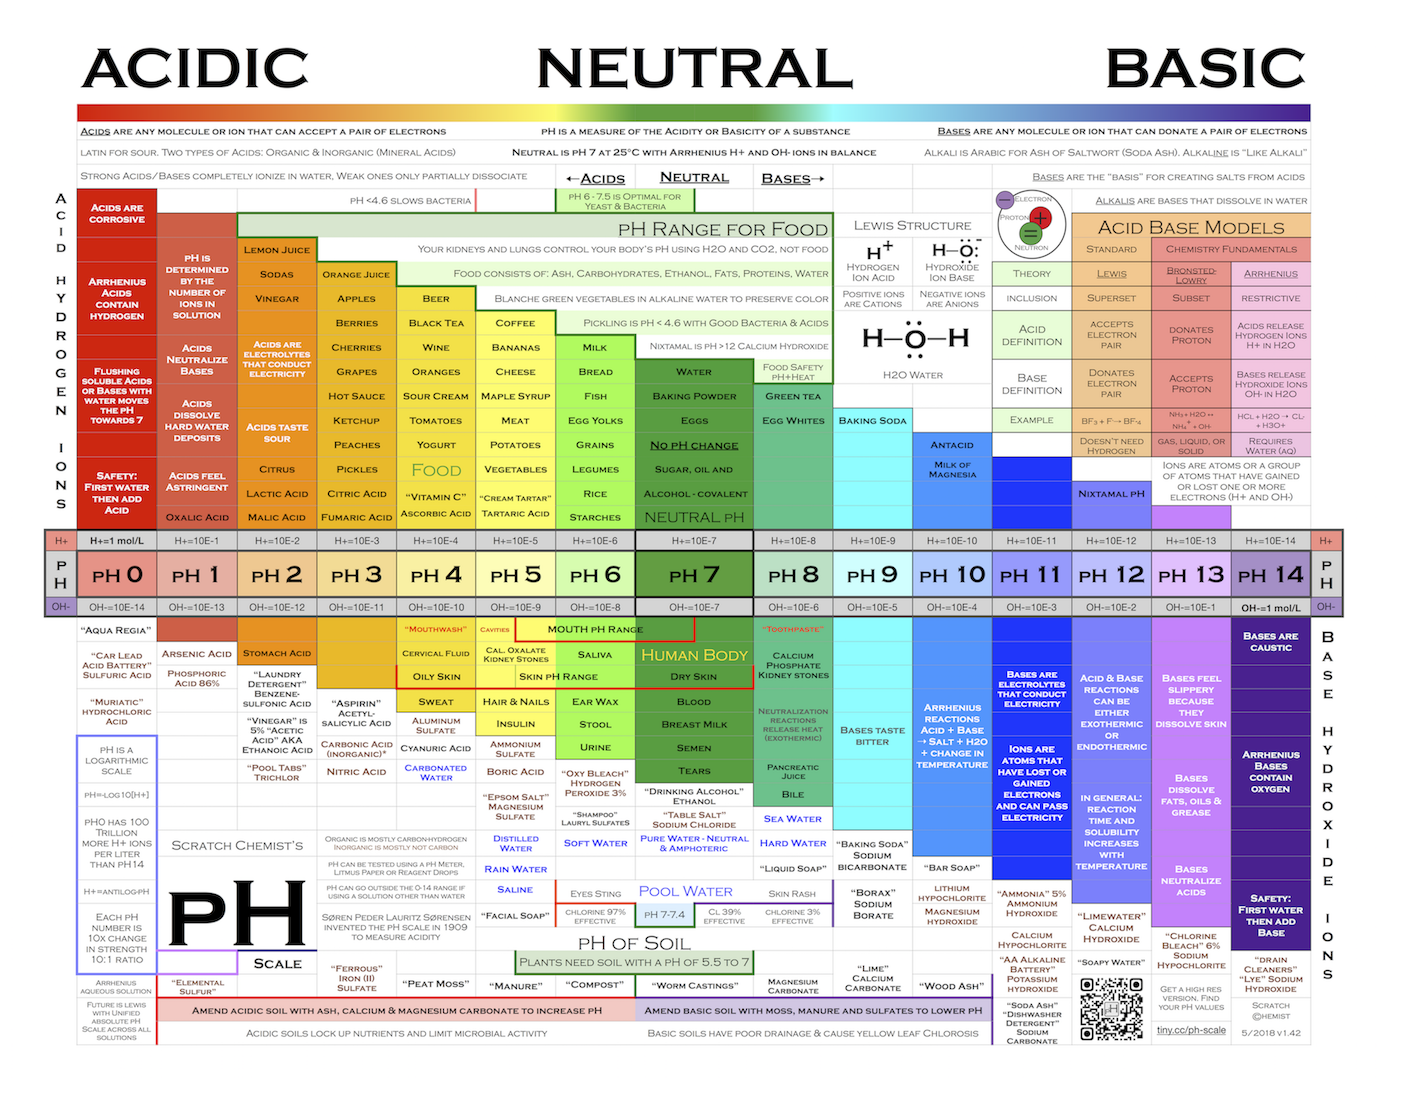 Scratch Chemist's pH Scale - Content Geek